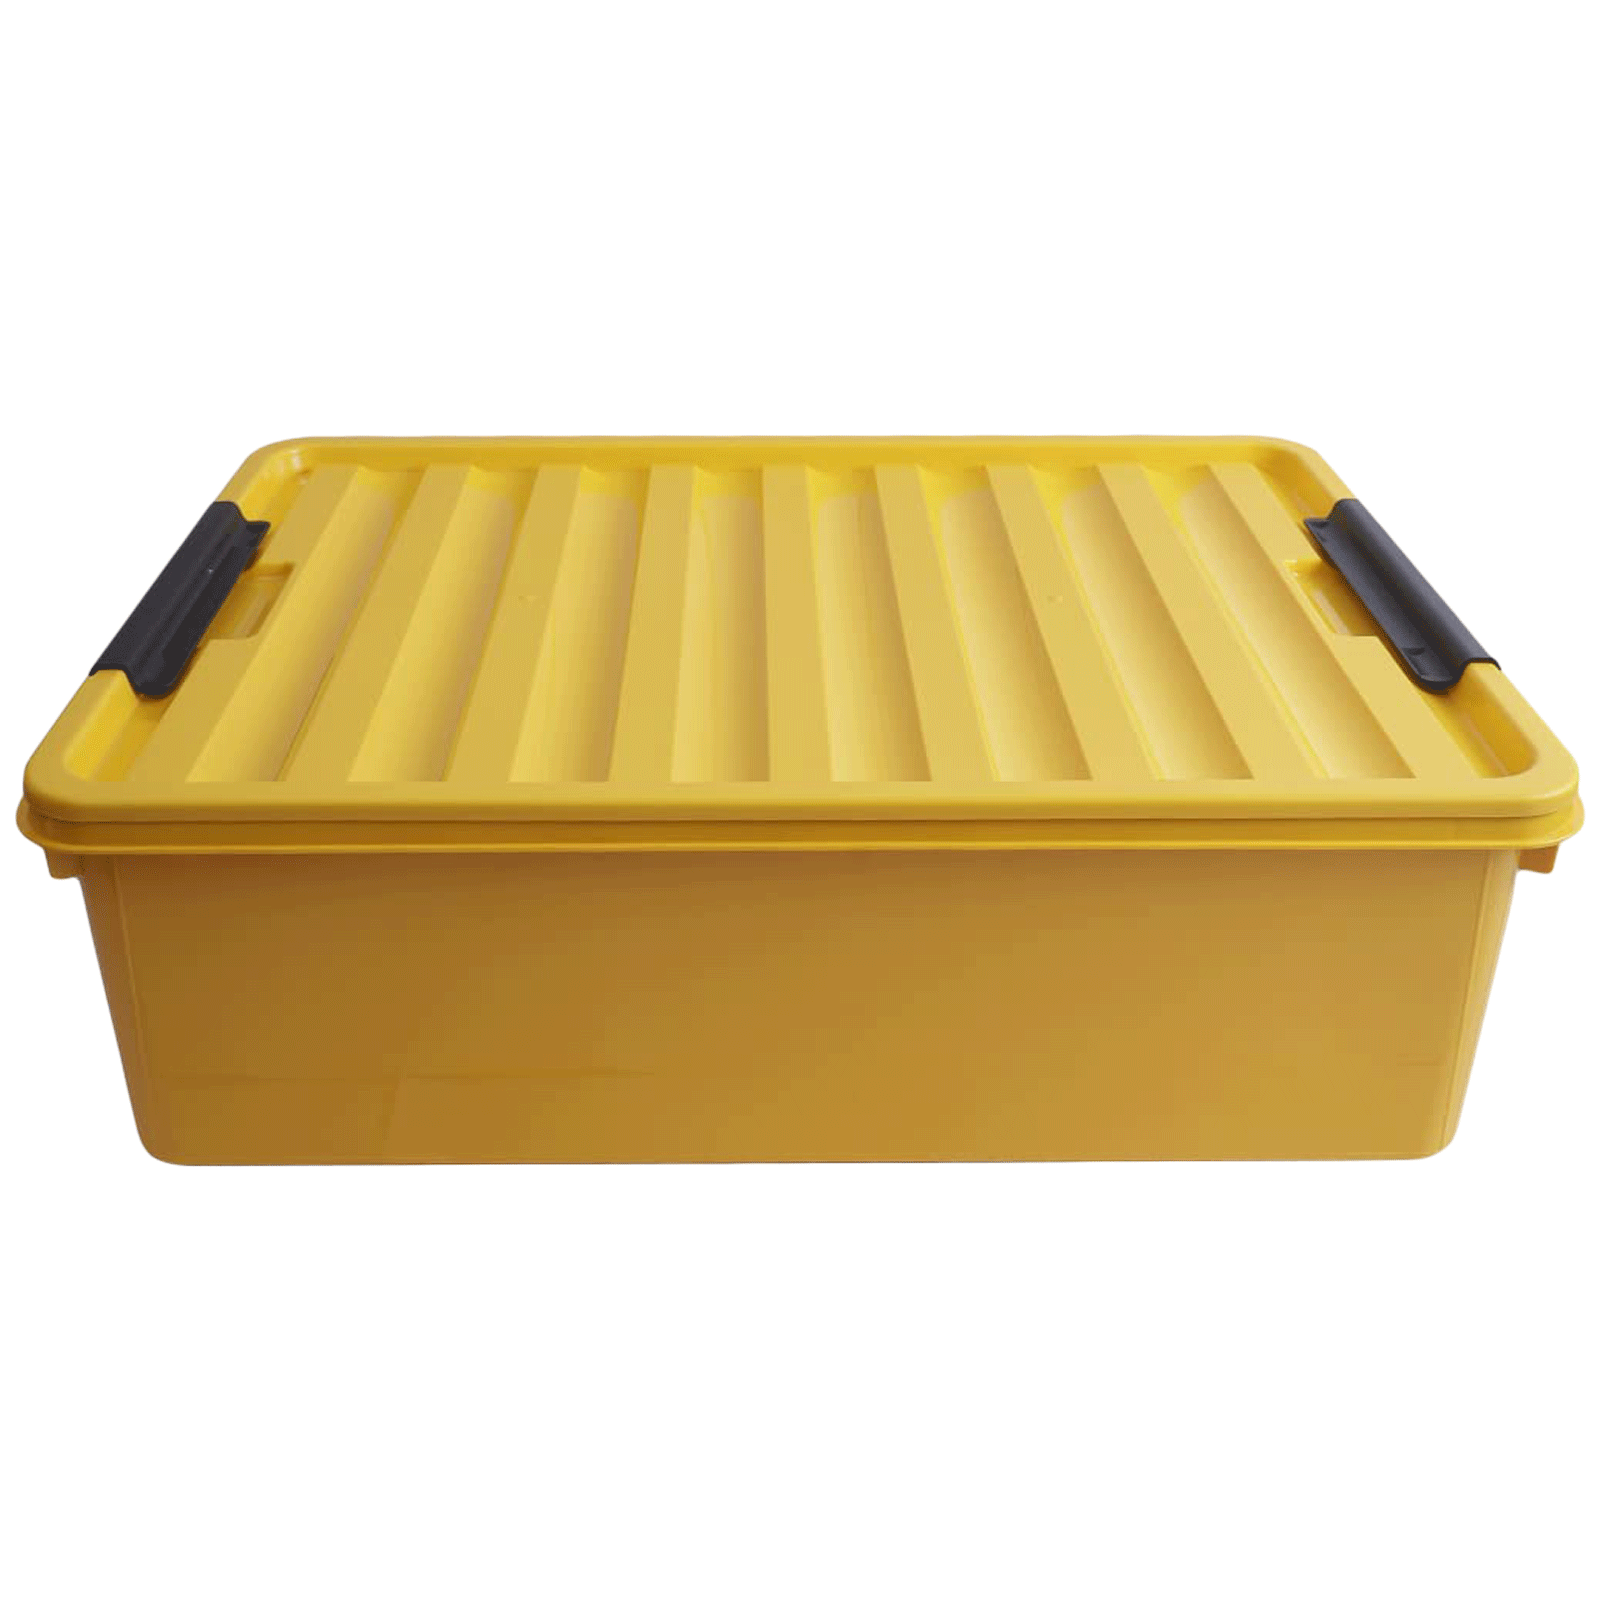 Lock & Lock Inplus 30 Litre Rectangular Polypropylene Storage Container (Easy Clip, INP112YL, Yellow)_1